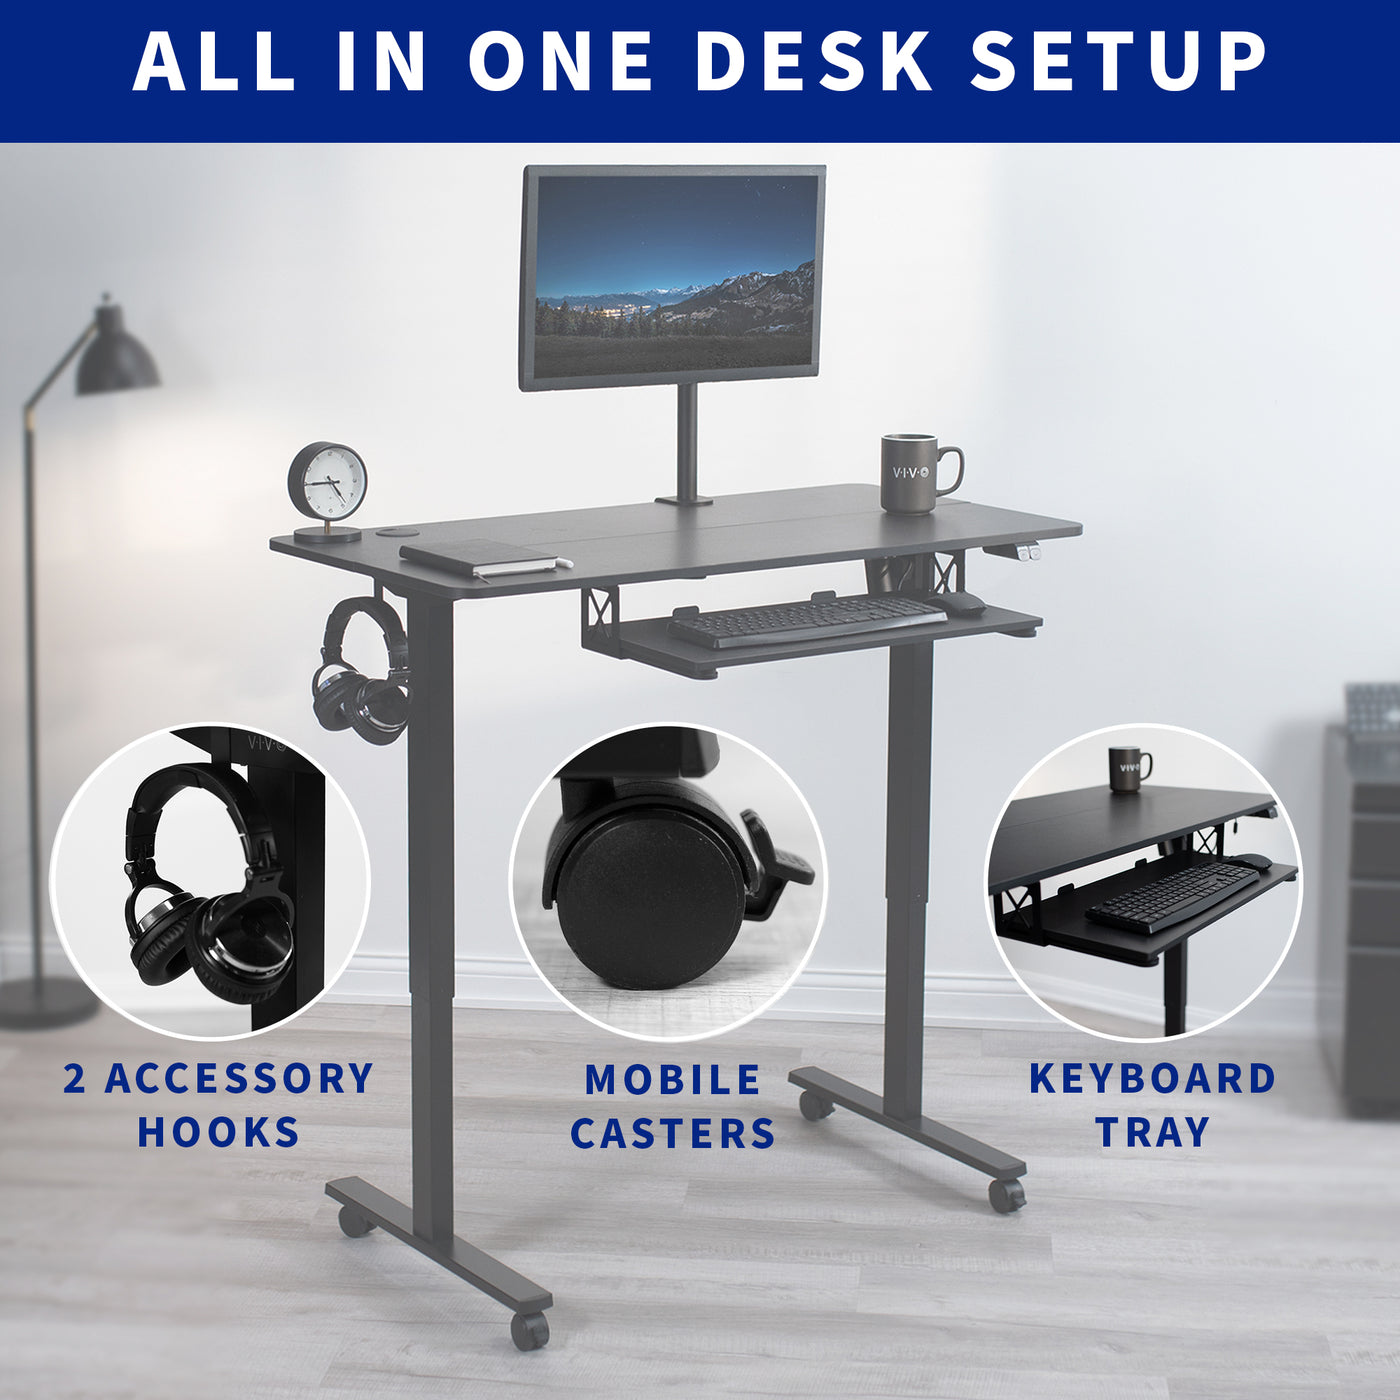 Under Desk Accessory Hooks by UPLIFT Desk